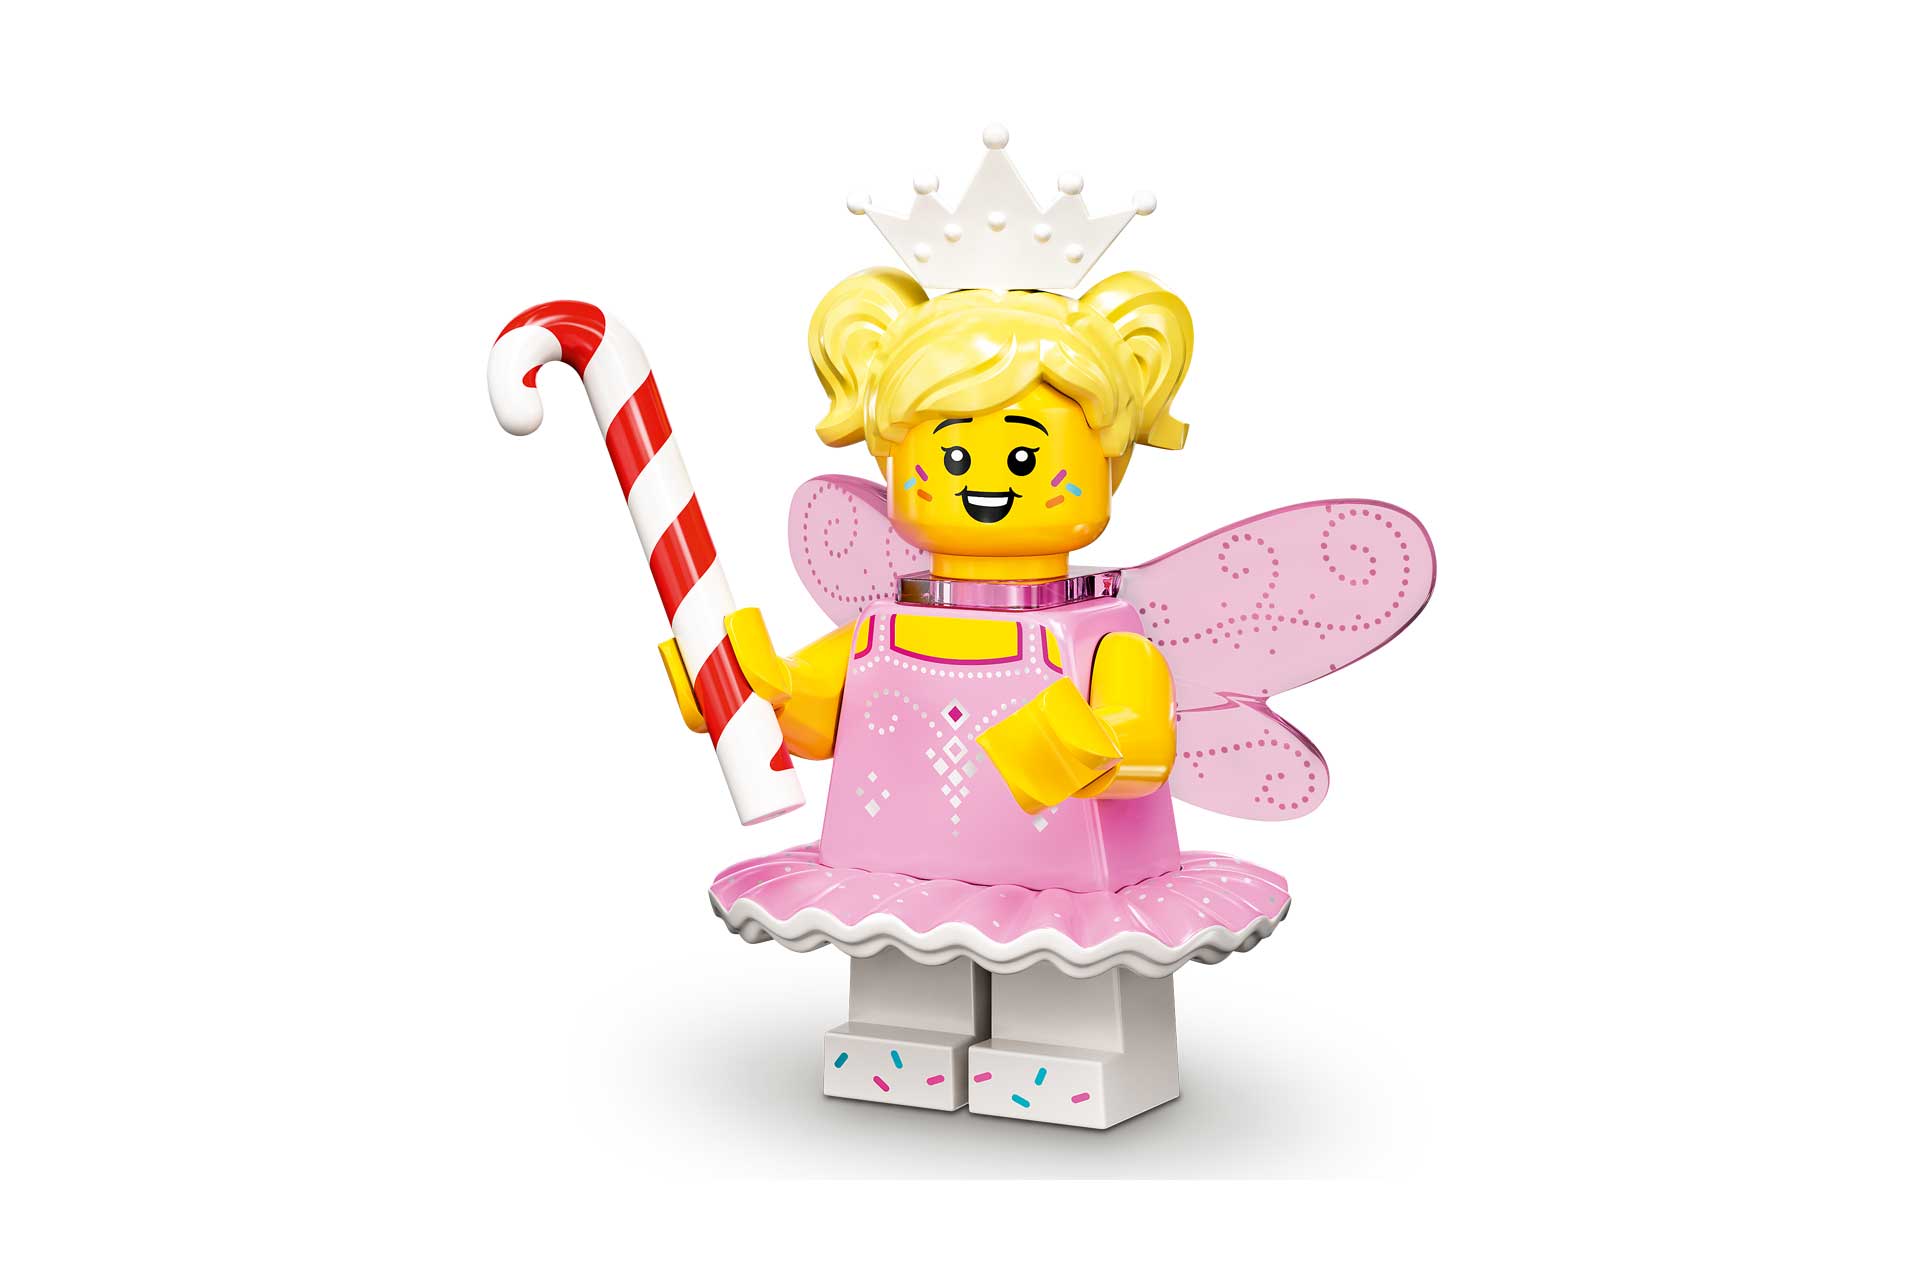 LEGO-71034_WEB_SEC012_NOBG.jpg